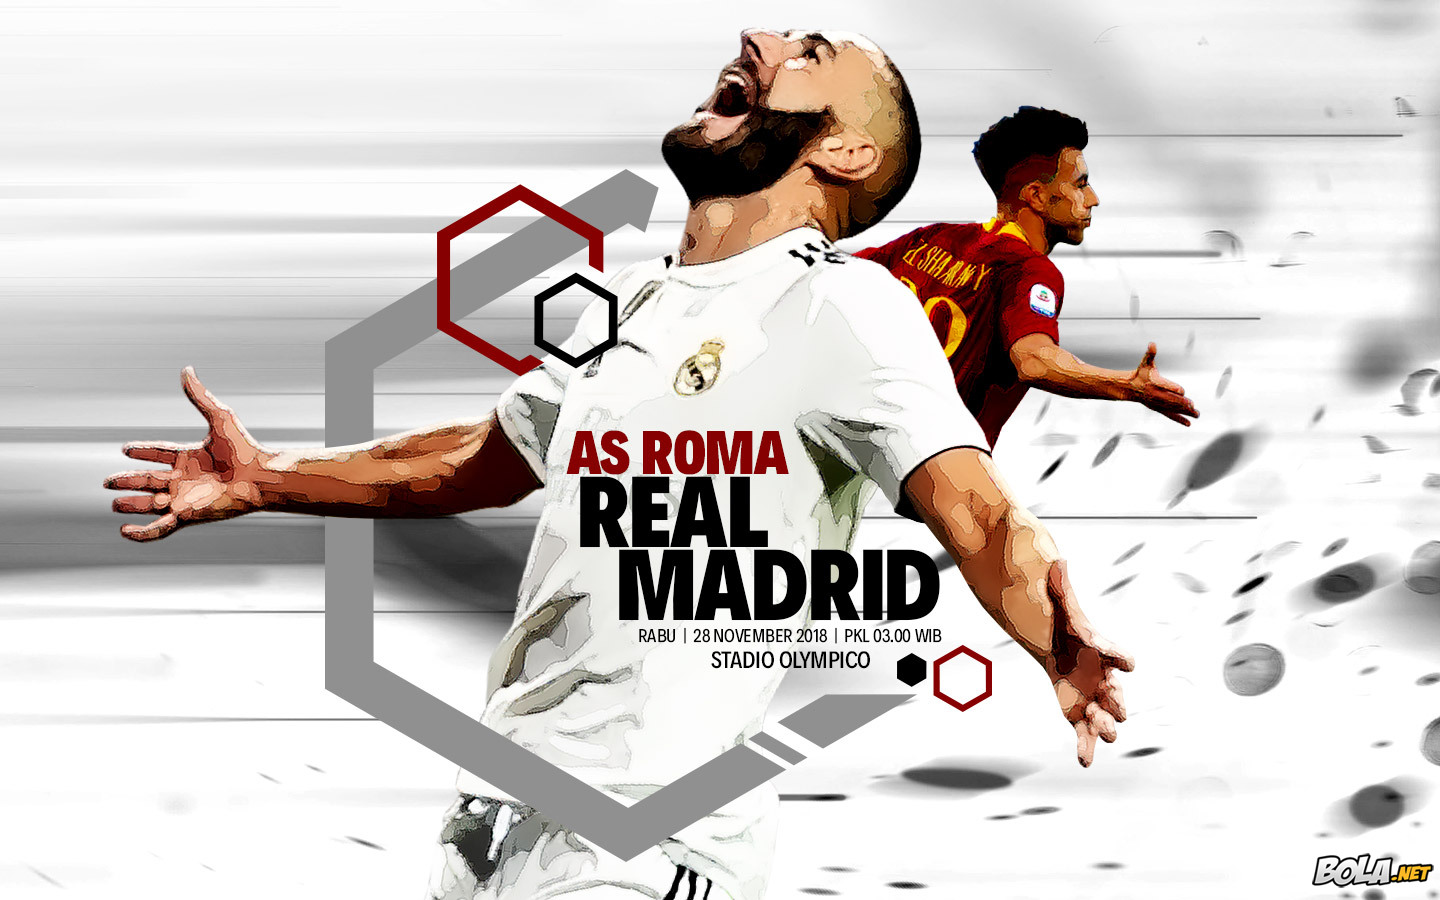 Deskripsi : Wallpaper As Roma Vs Real Madrid, size: 1440x900